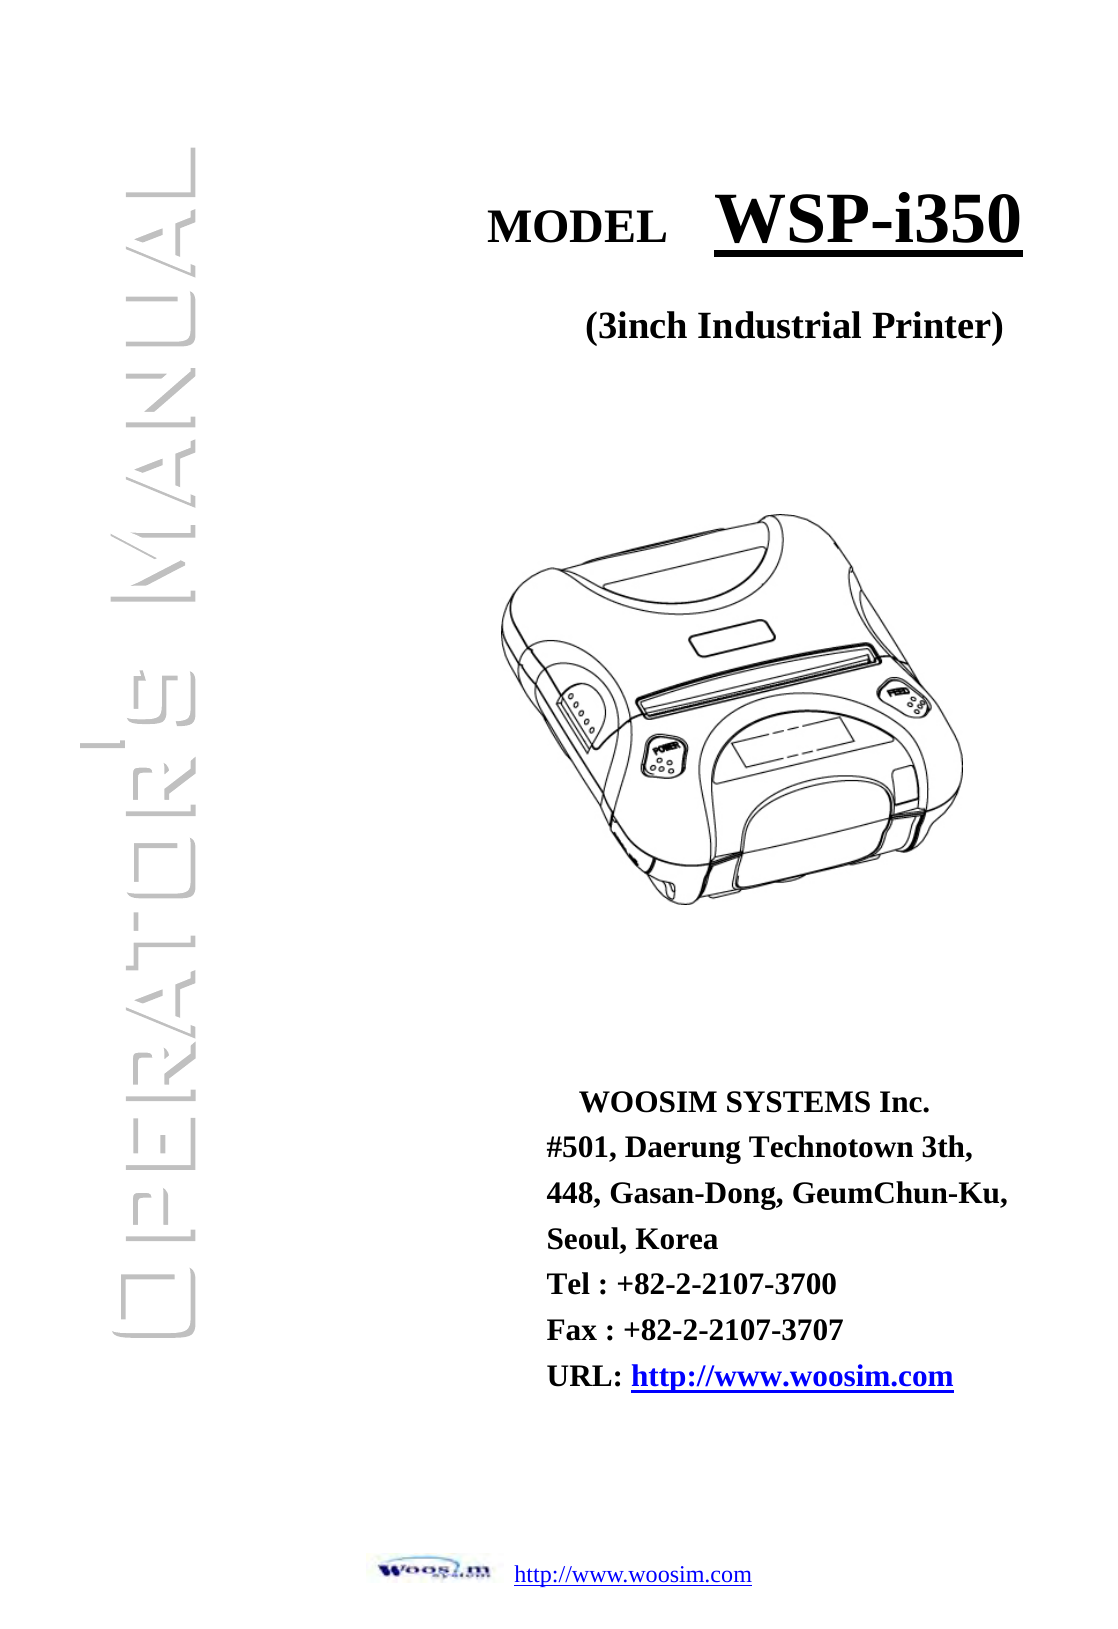  http://www.woosim.com                                   MODEL  WSP-i350 WOOSIM SYSTEMS Inc. #501, Daerung Technotown 3th, 448, Gasan-Dong, GeumChun-Ku, Seoul, Korea Tel : +82-2-2107-3700 Fax : +82-2-2107-3707 URL: http://www.woosim.com (3inch Industrial Printer)  